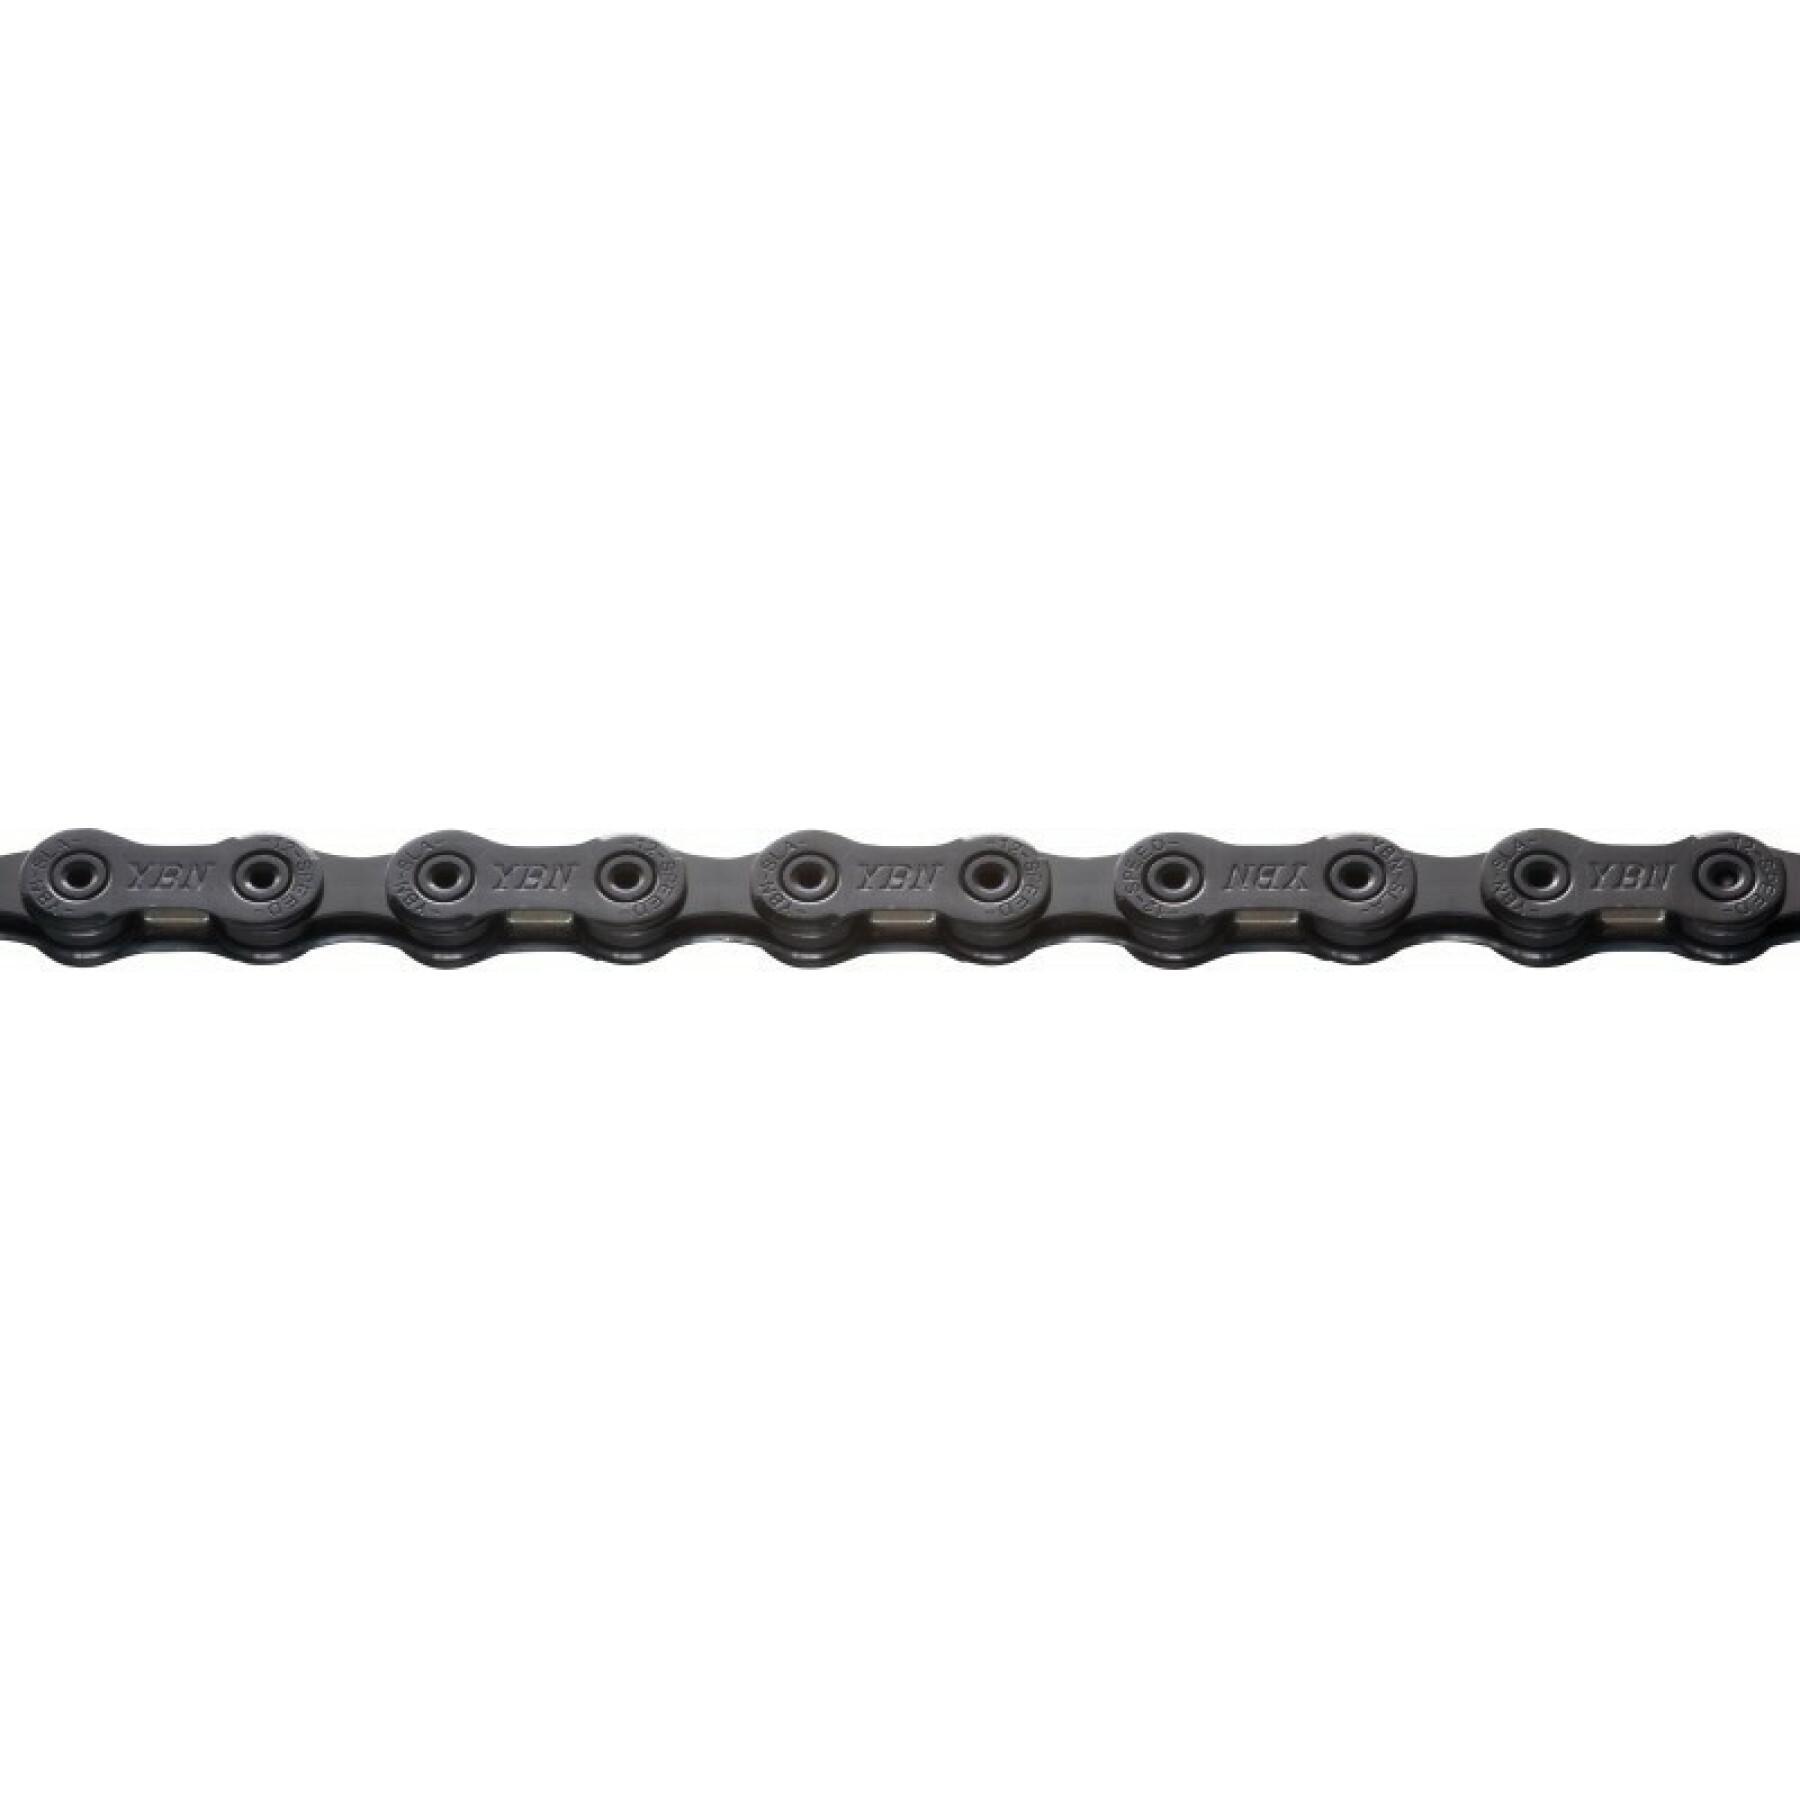 Self-lubricating chain Yaban 240g (928)